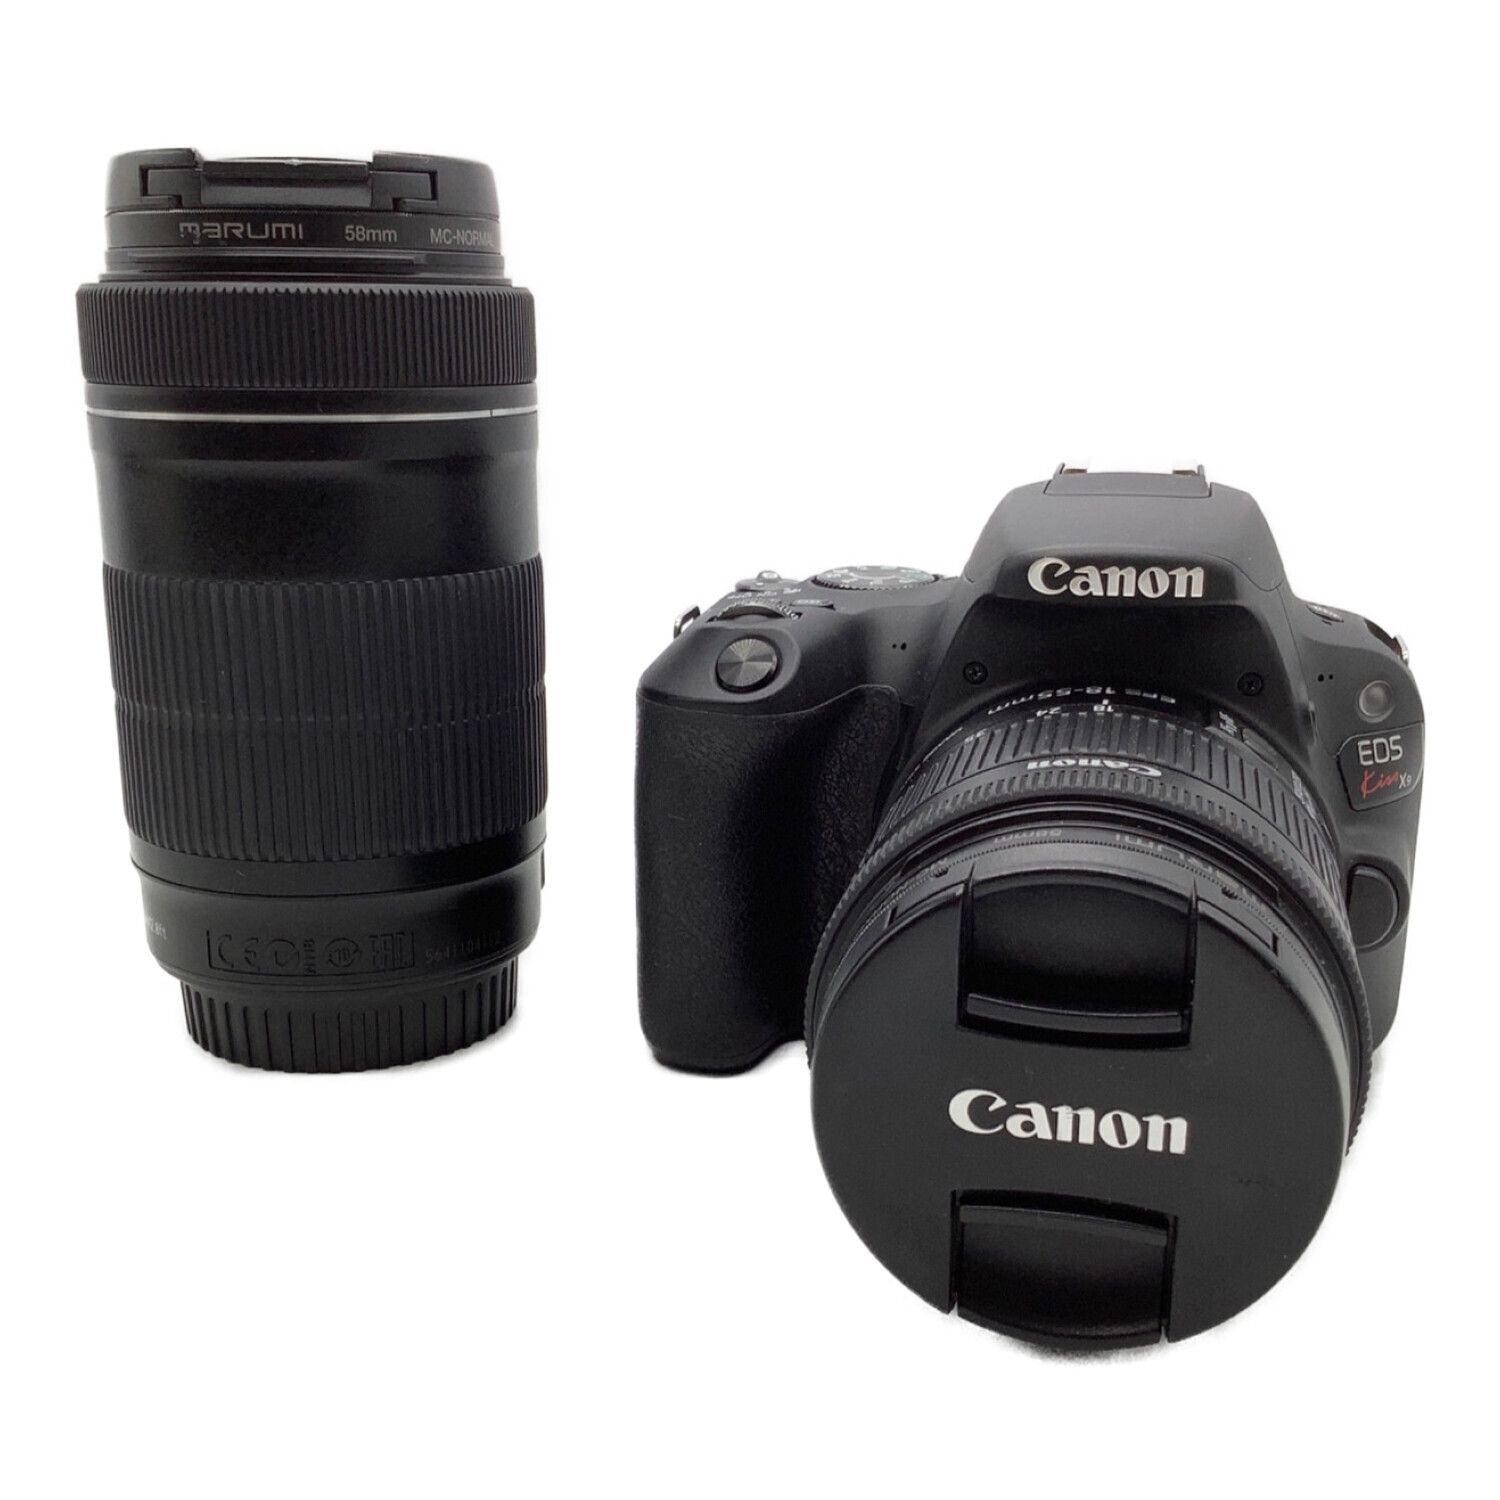 CANON (キャノン) デジタル一眼レフカメラ EOS Kiss X9 DS1266714 2420